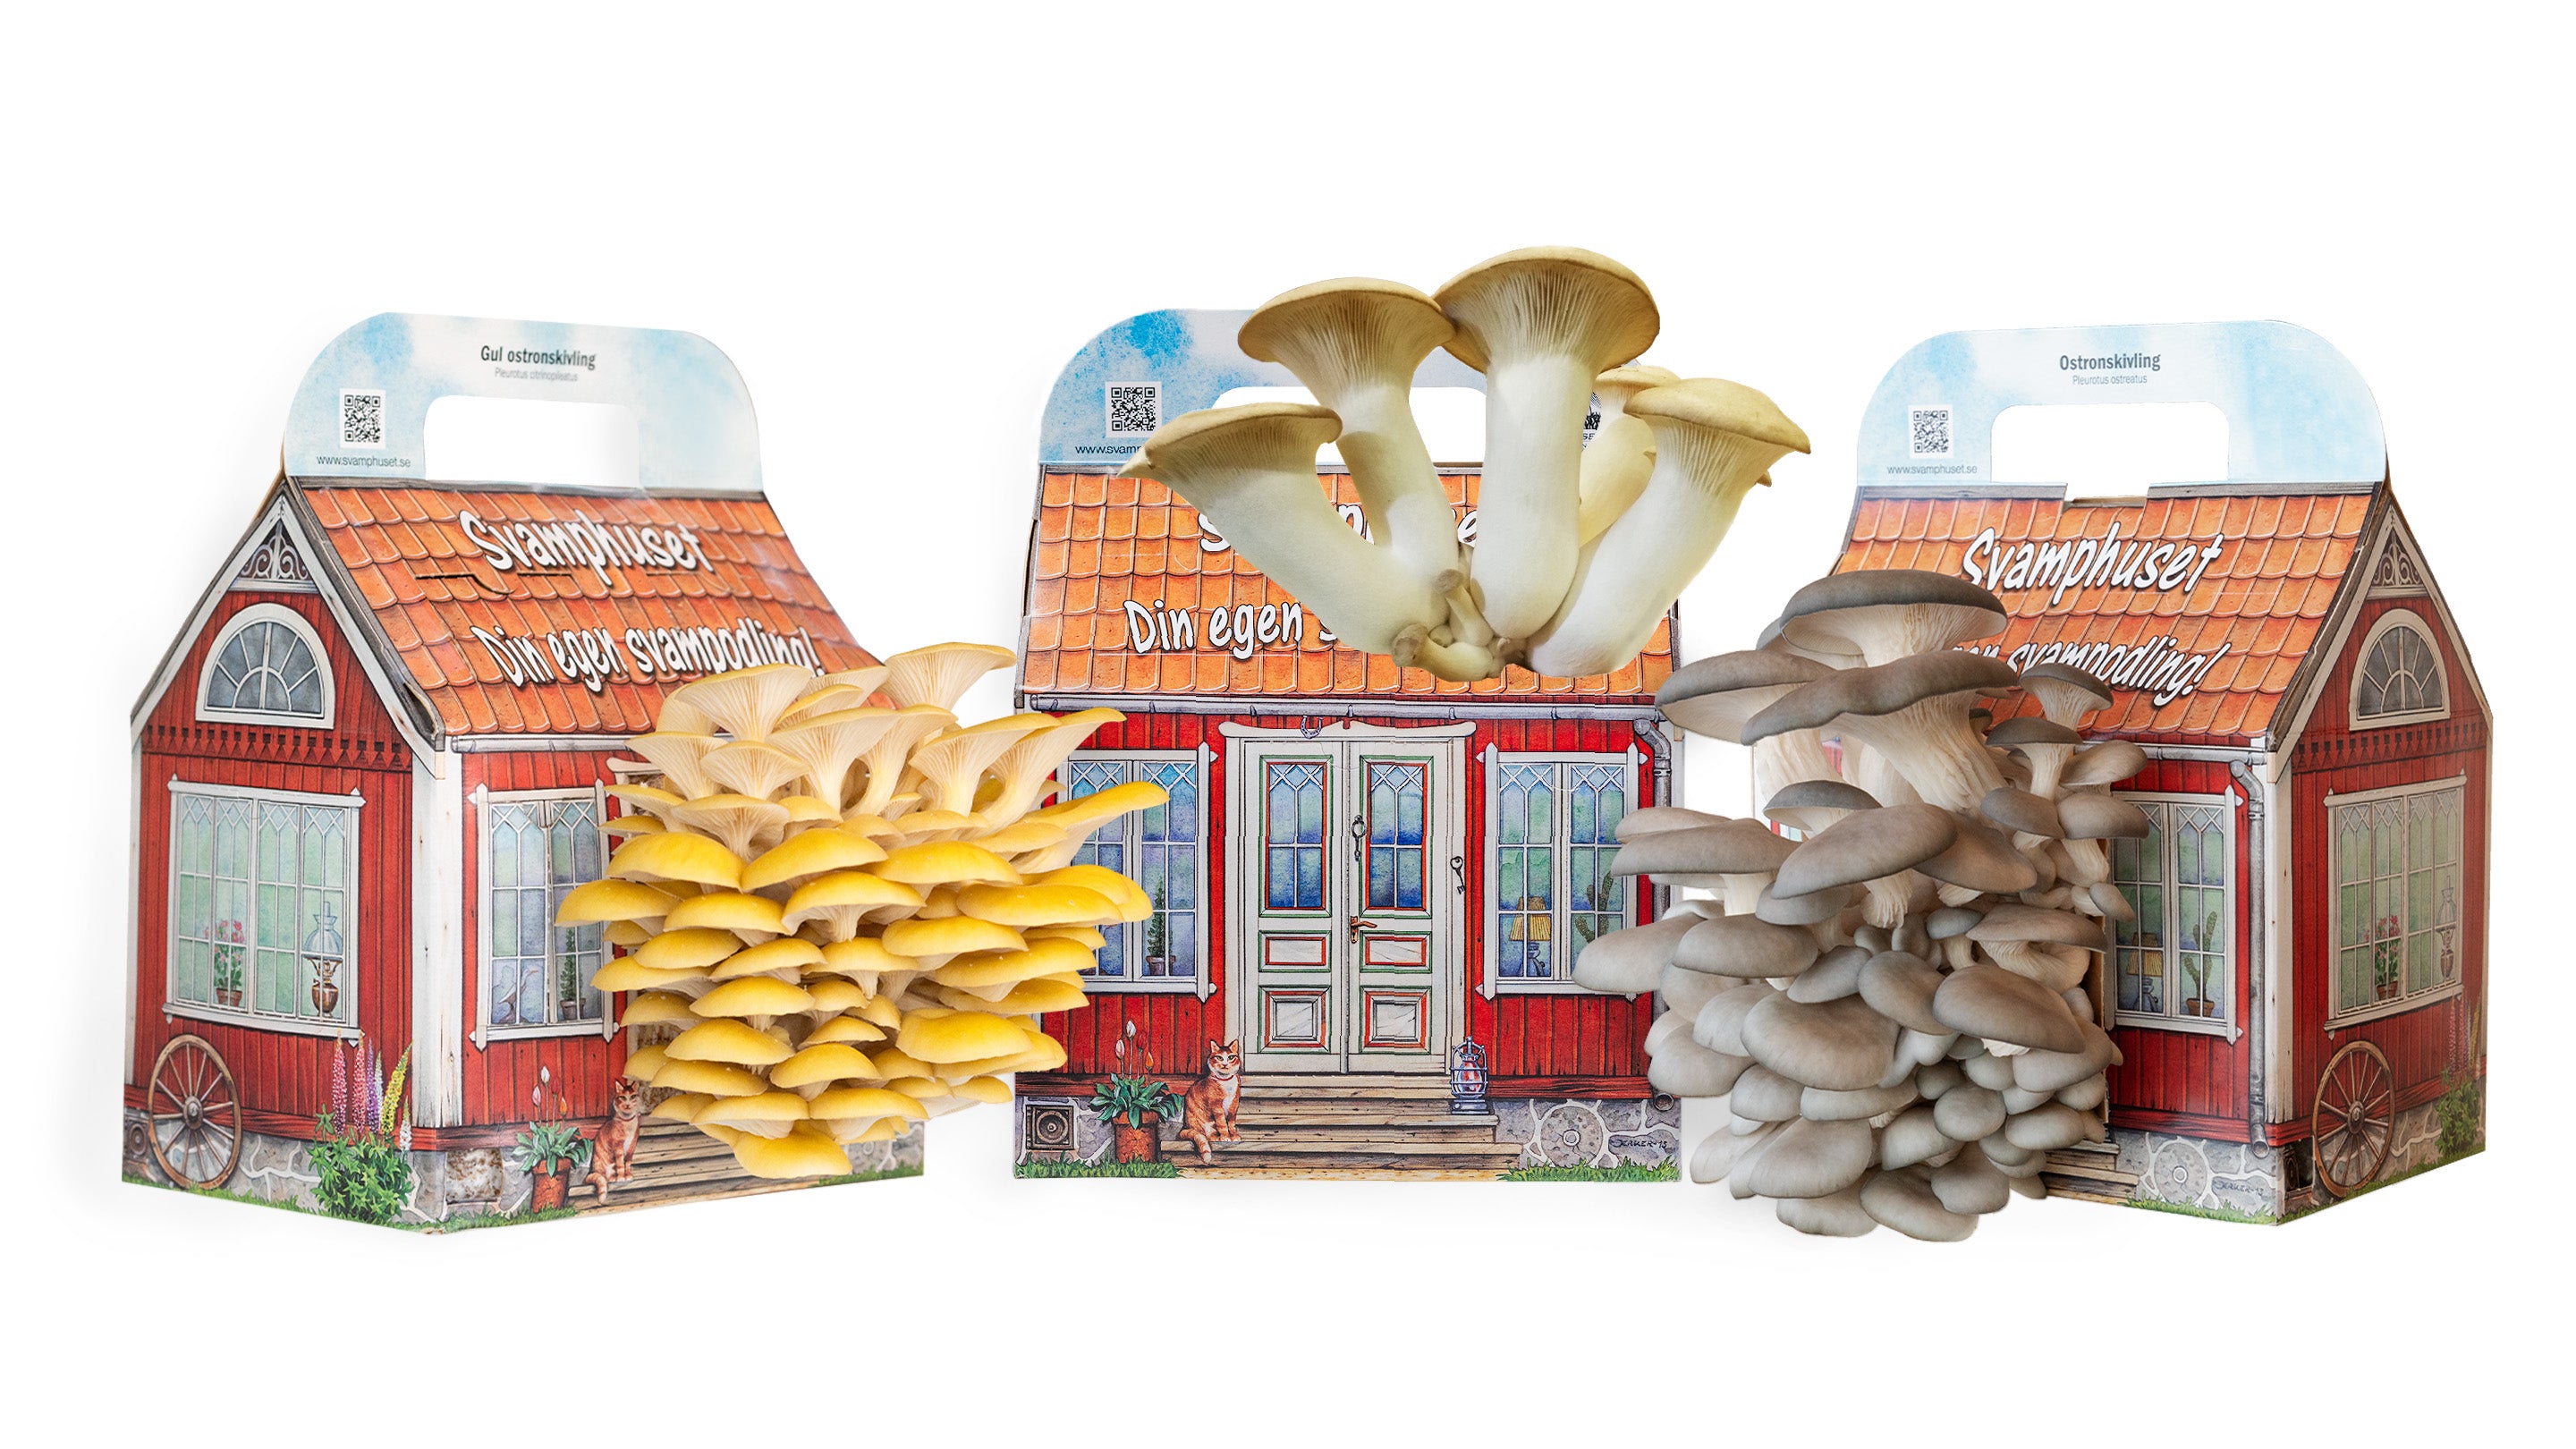 The Swedish Mushroom House